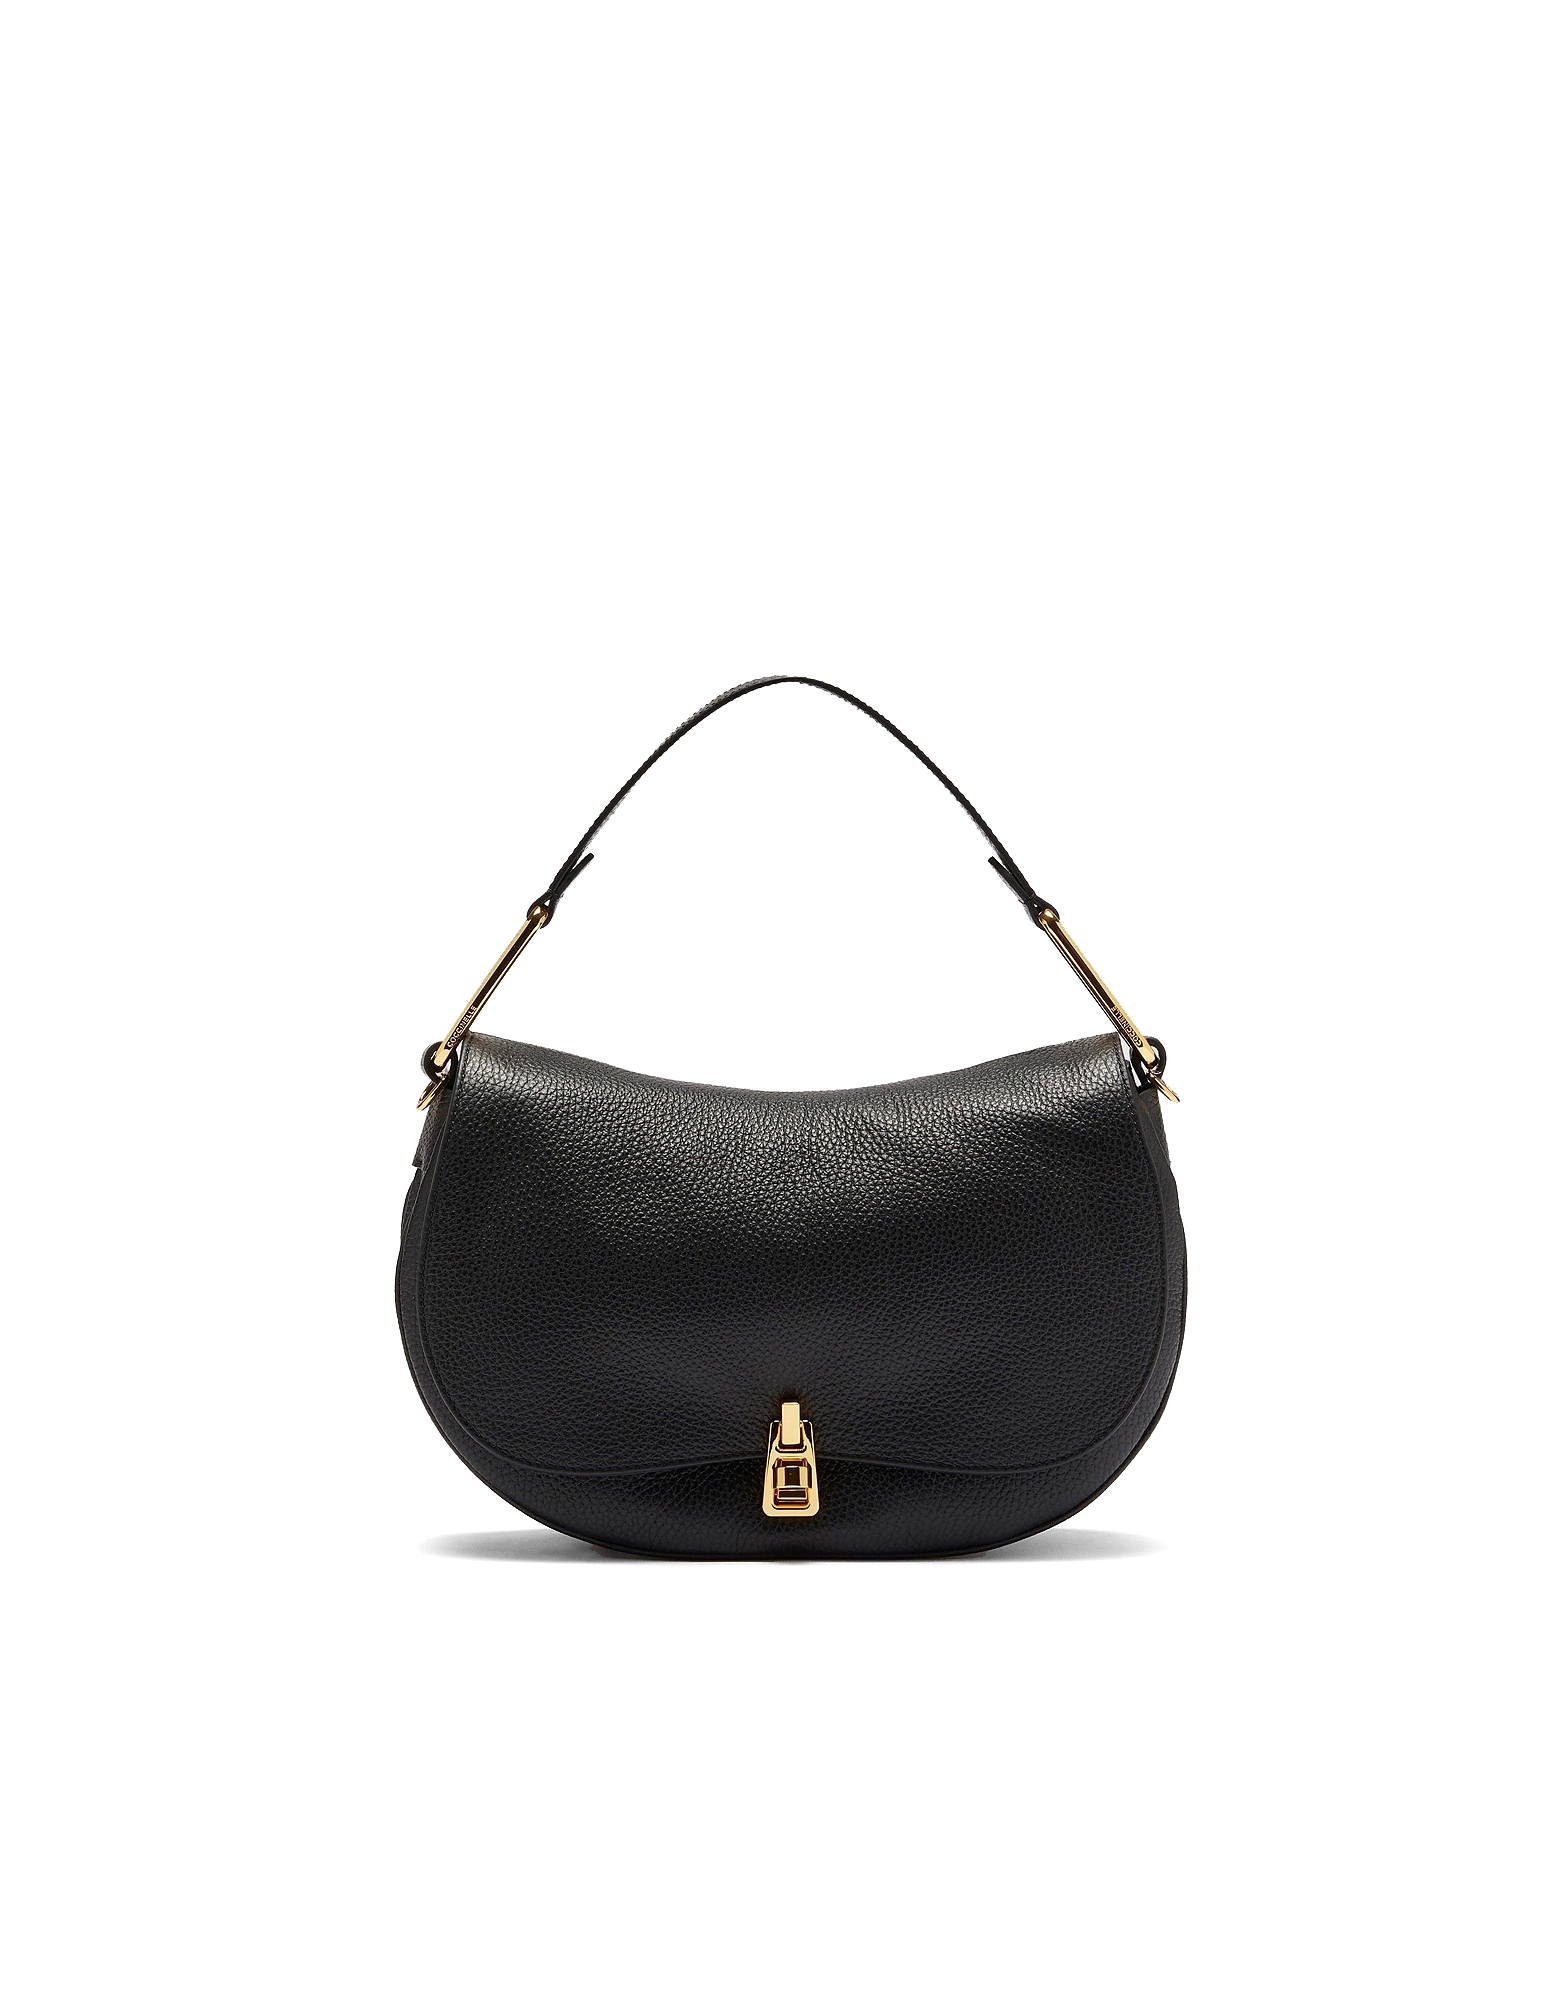 Coccinelle Designer Handbags Women's Bag In Black